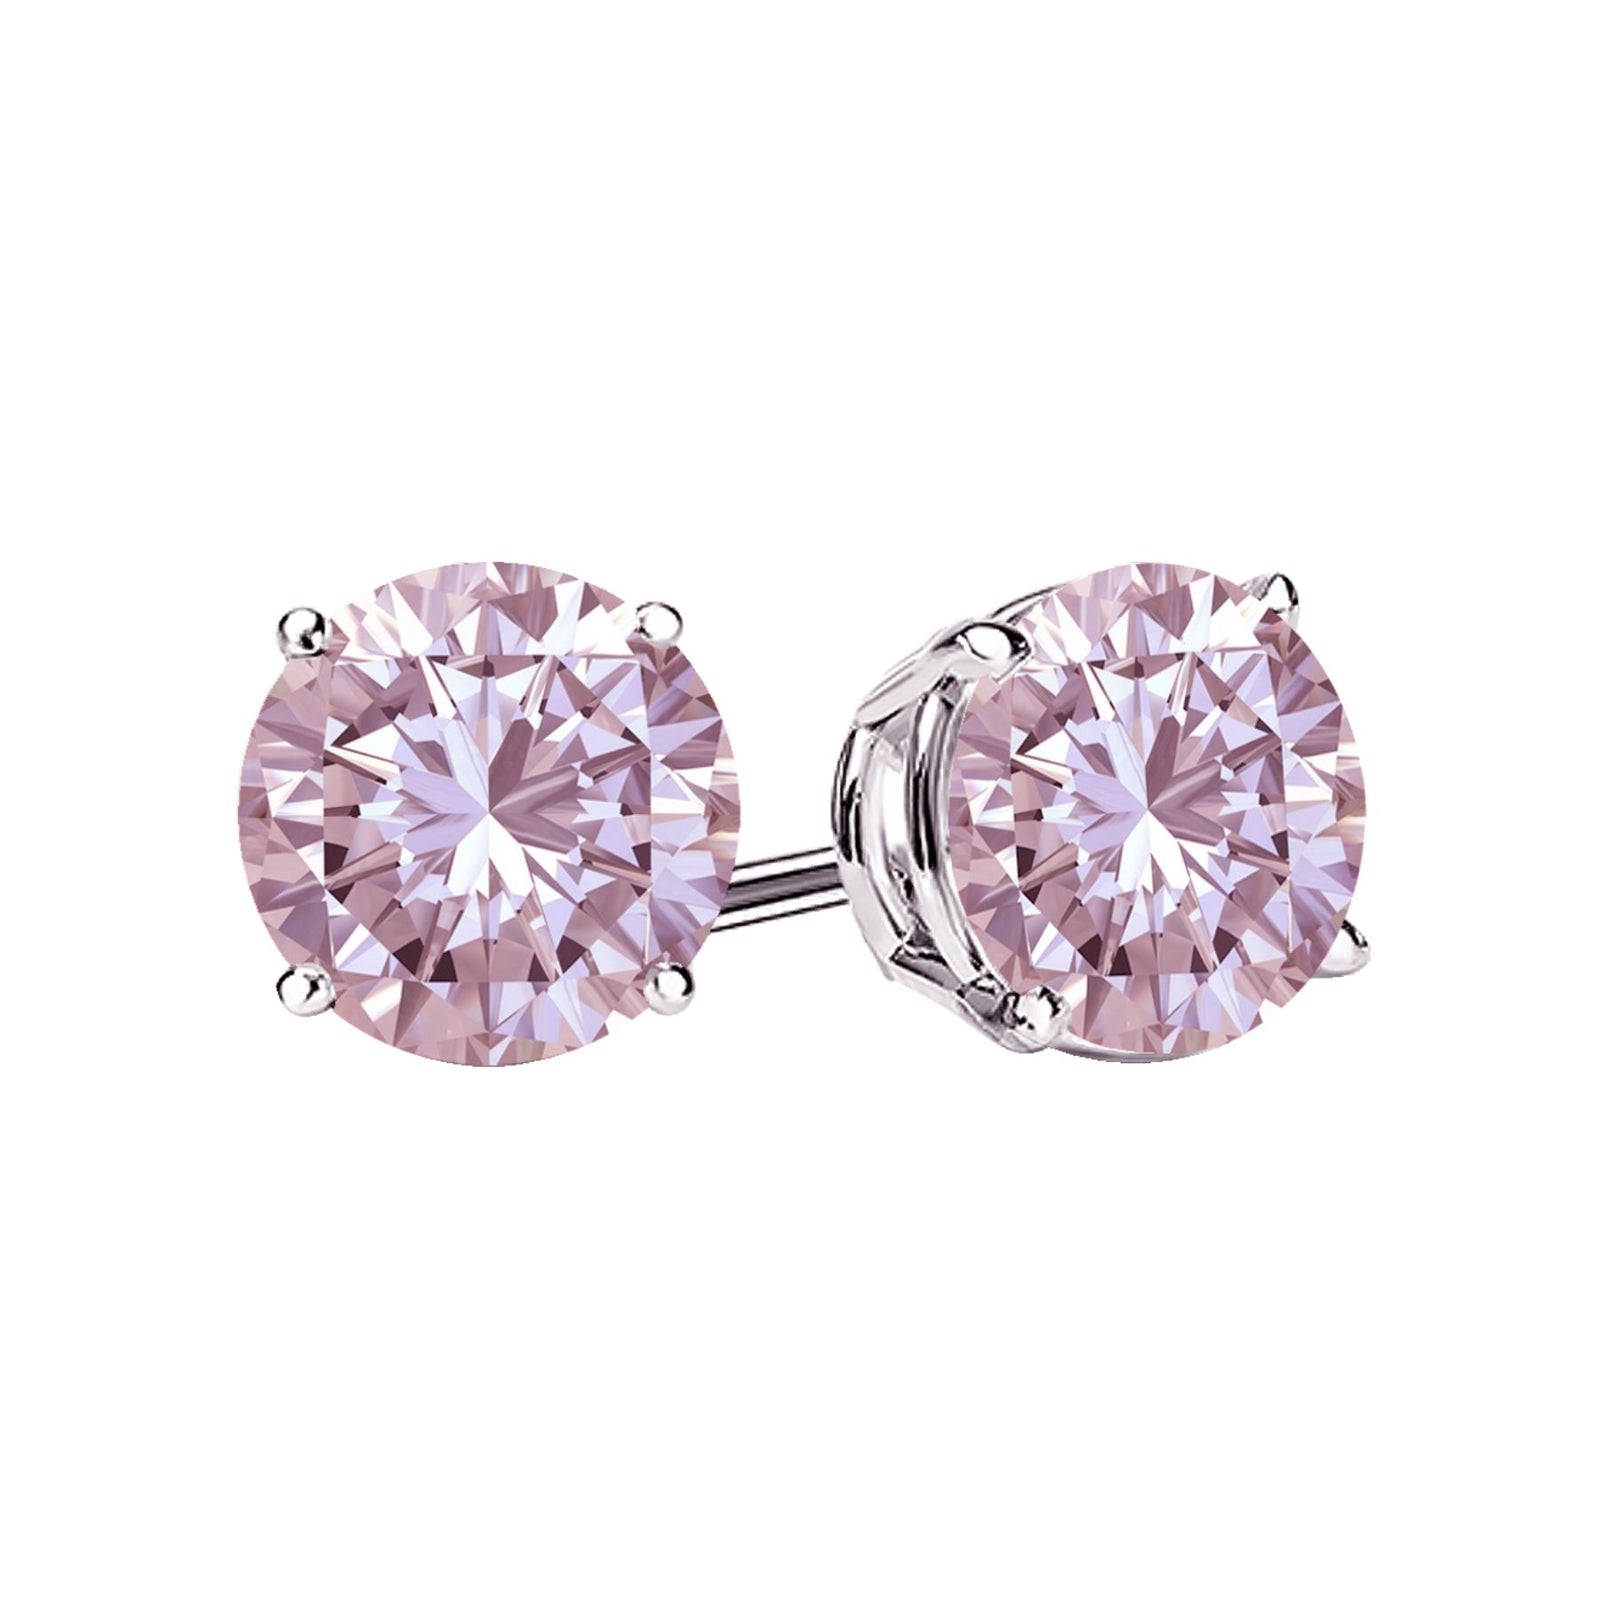 Diana Pink Diamond Necklace Earrings Set